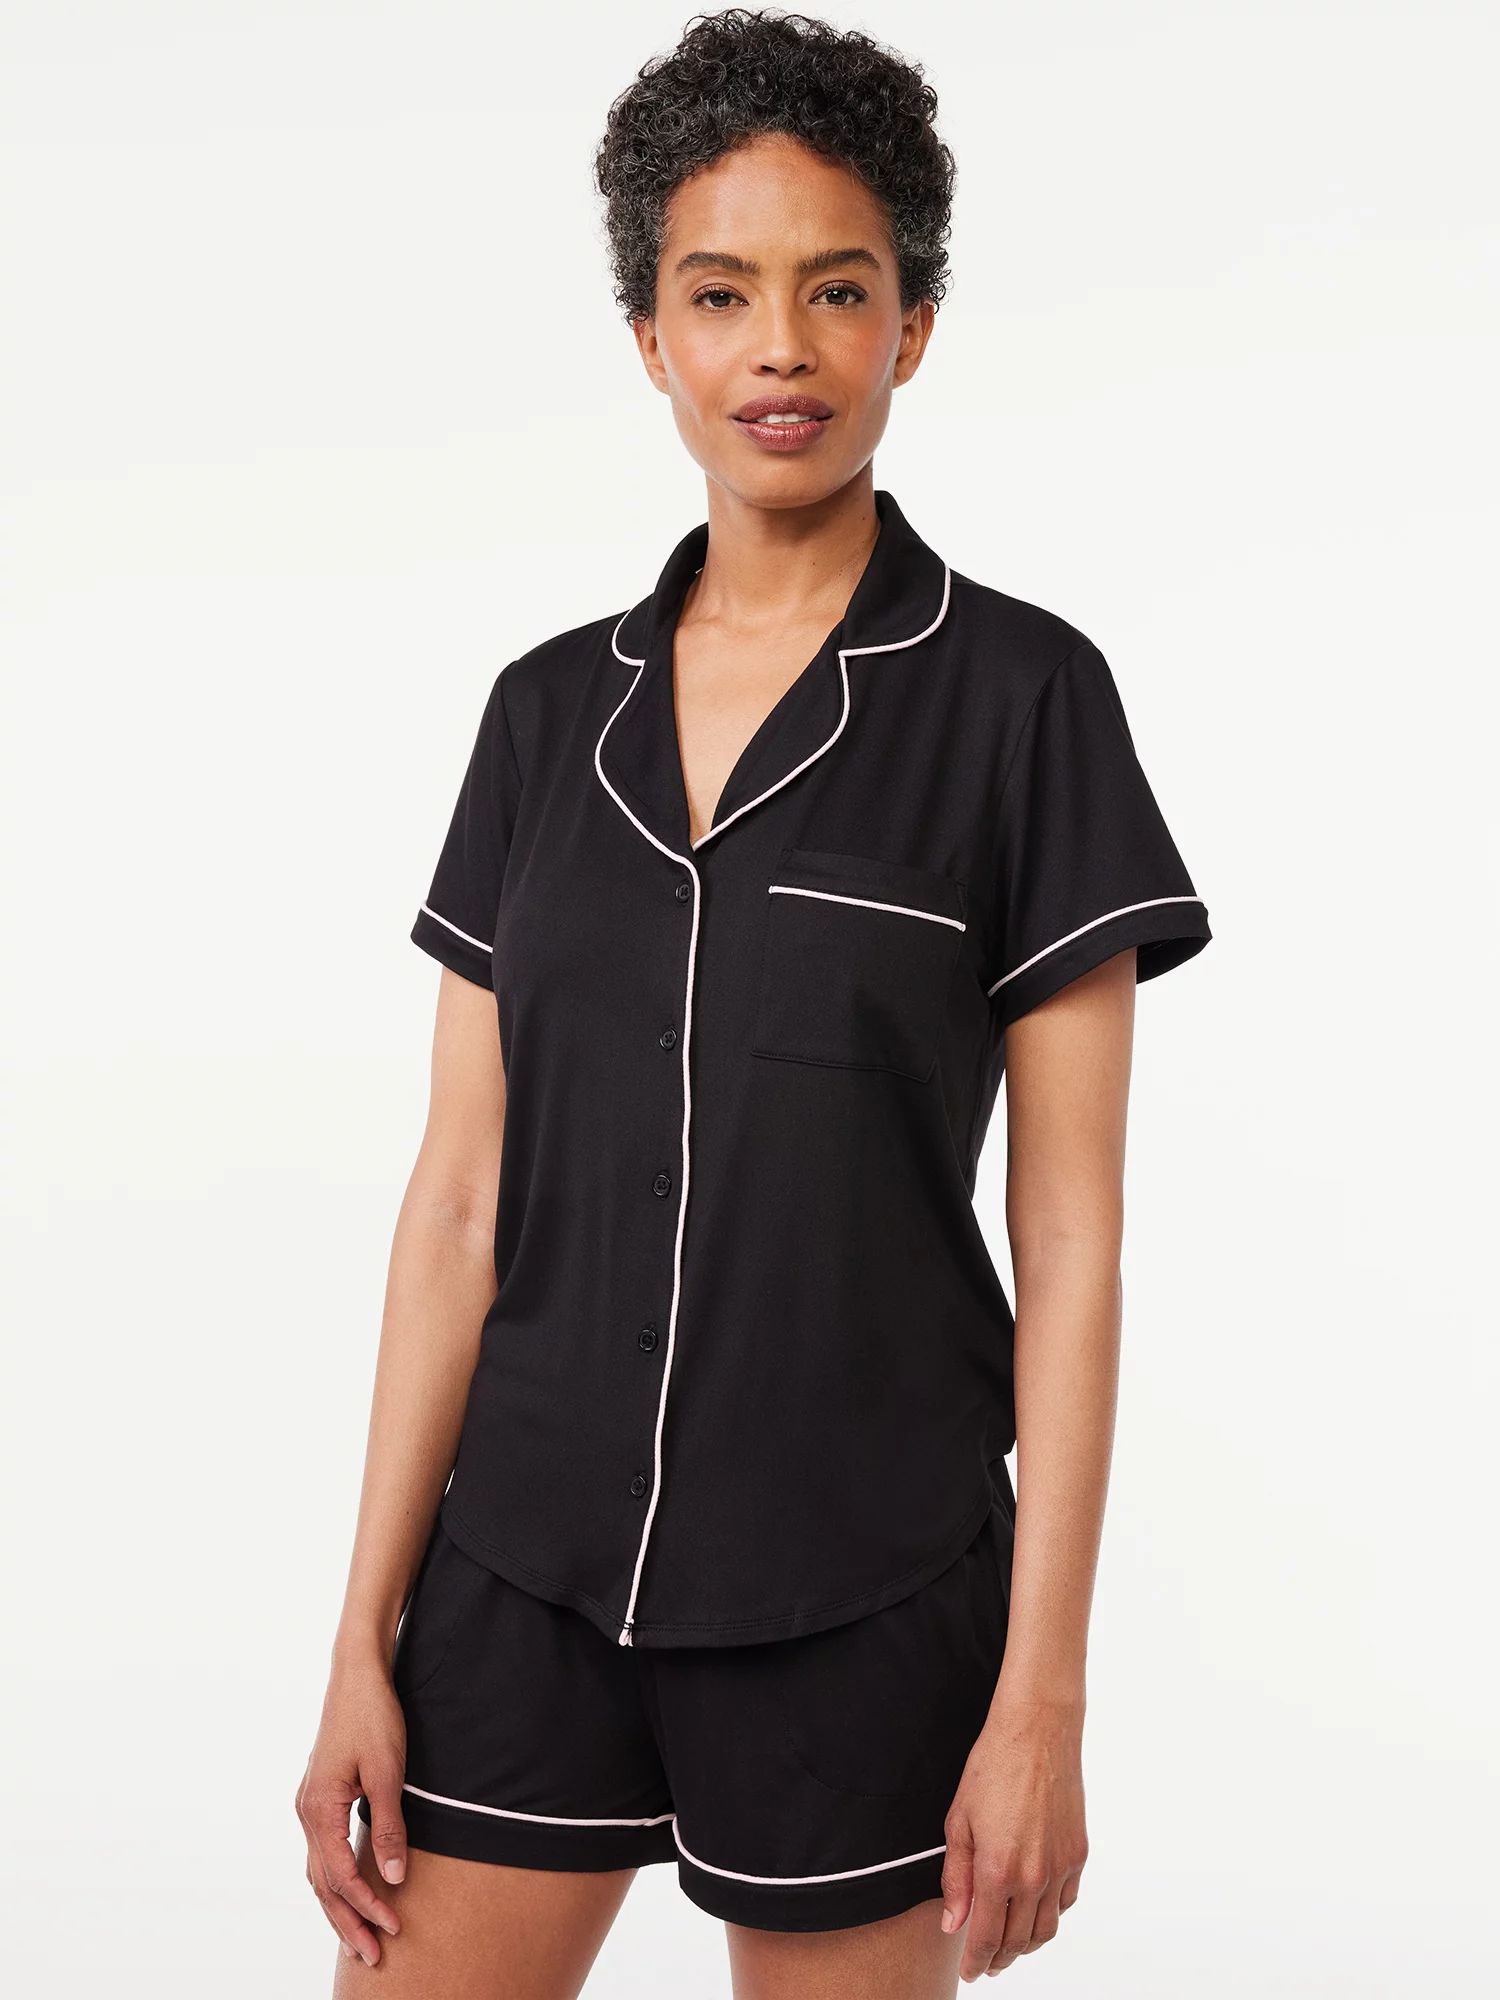 Joyspun Women's Knit Notch Collar Top and Shorts Pajama Set, 2-Piece, Sizes S to 3X | Walmart (US)